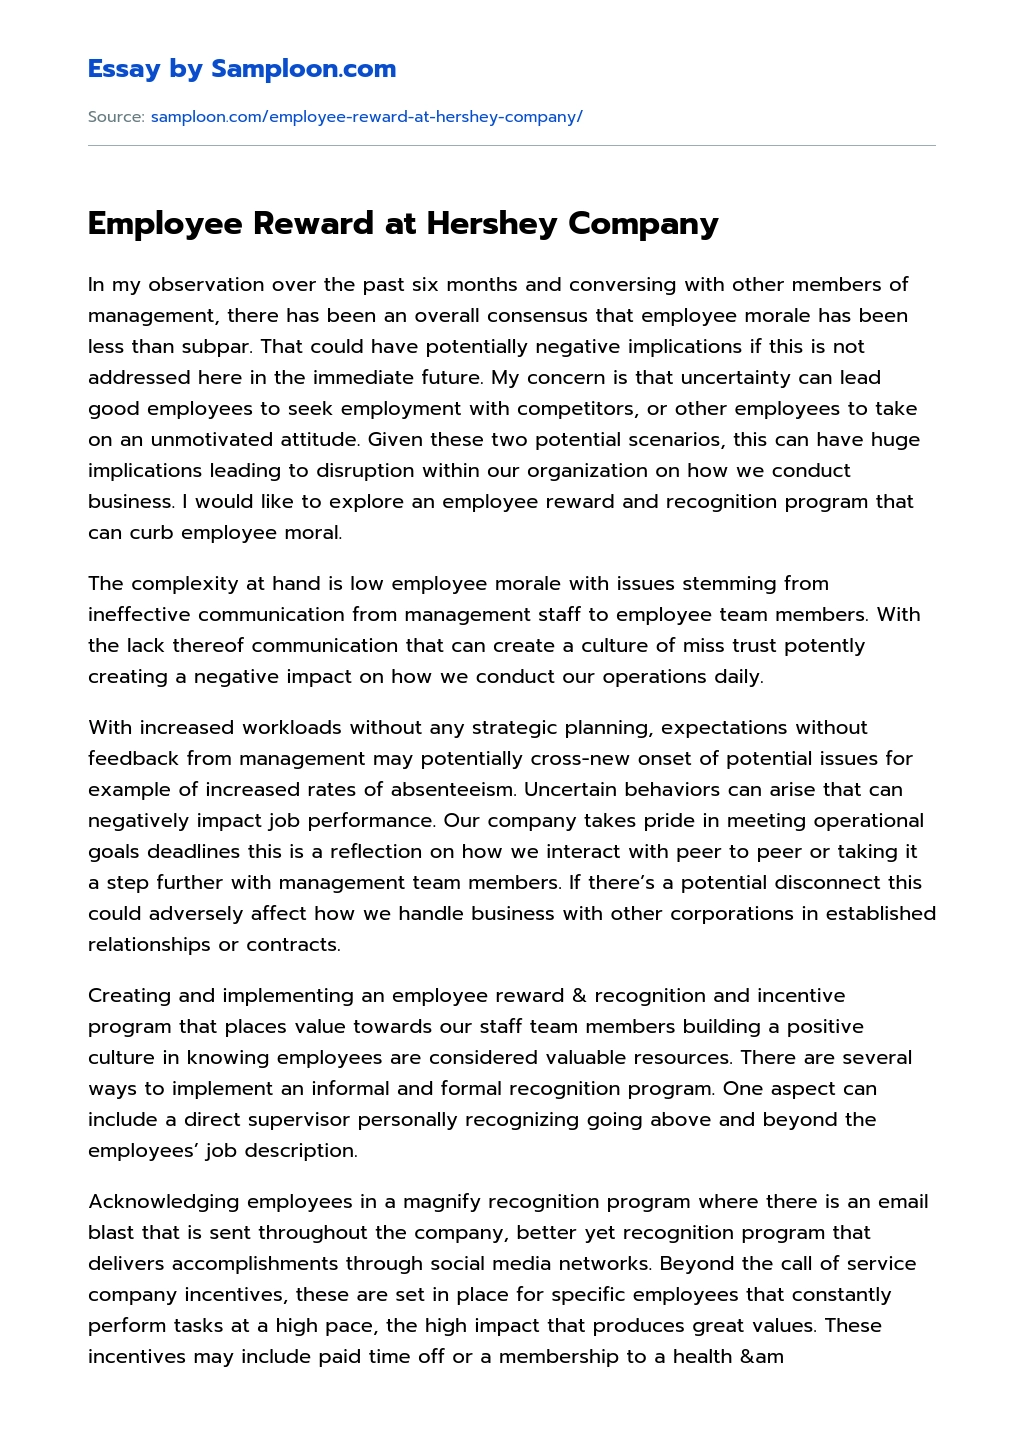 Employee Reward at Hershey Company essay